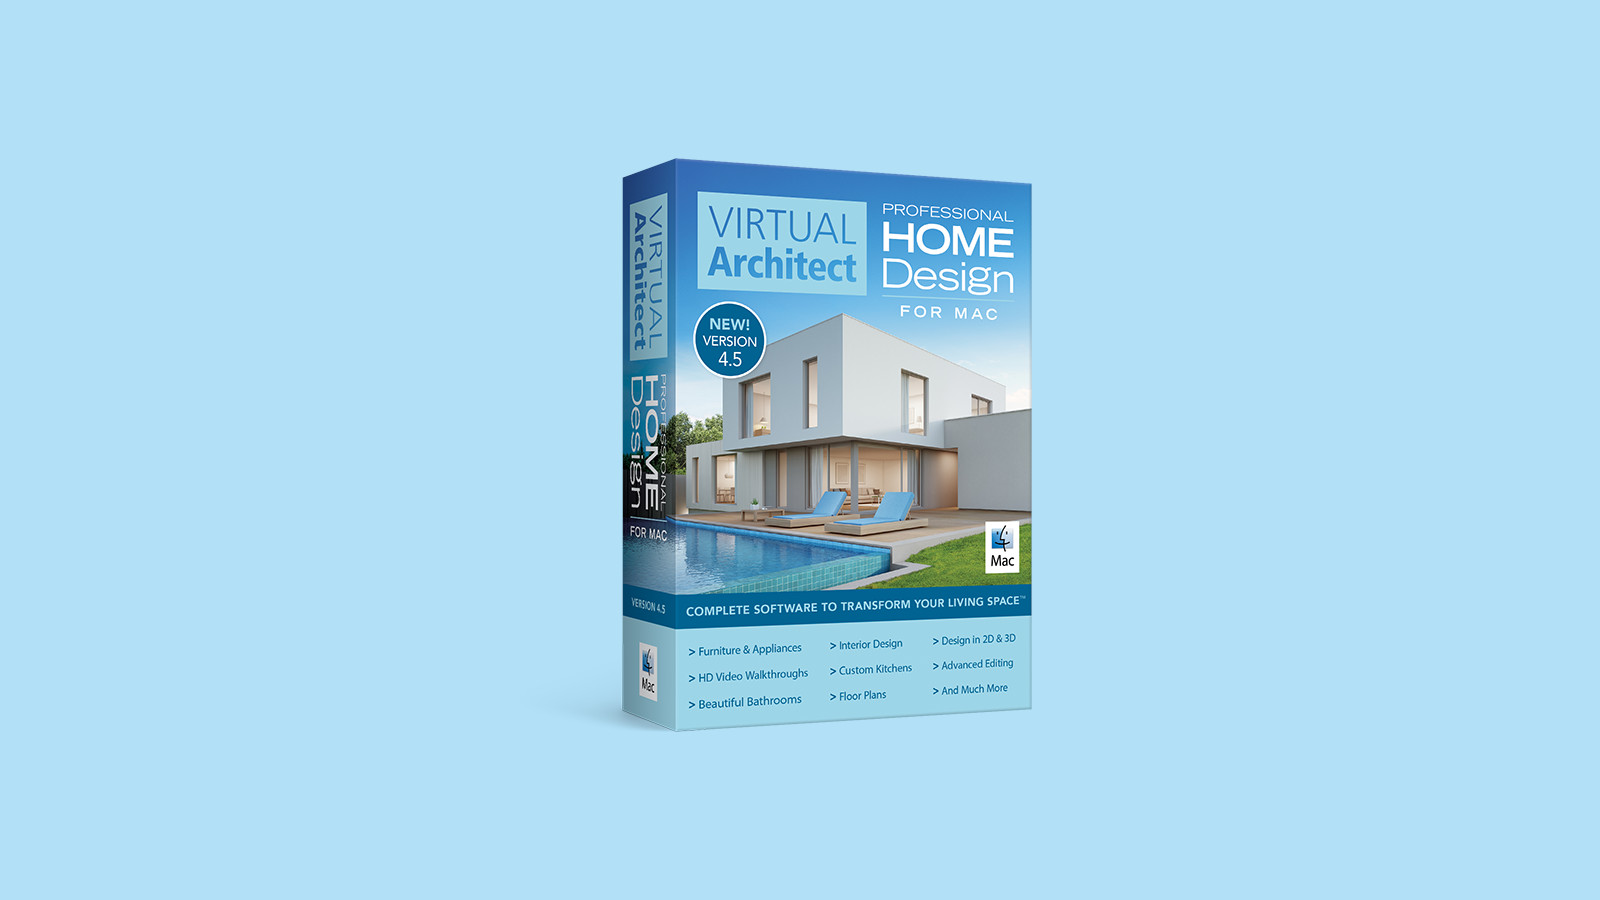 Virtual Architect Professional Home Design for Mac CD Key, 64.8 usd